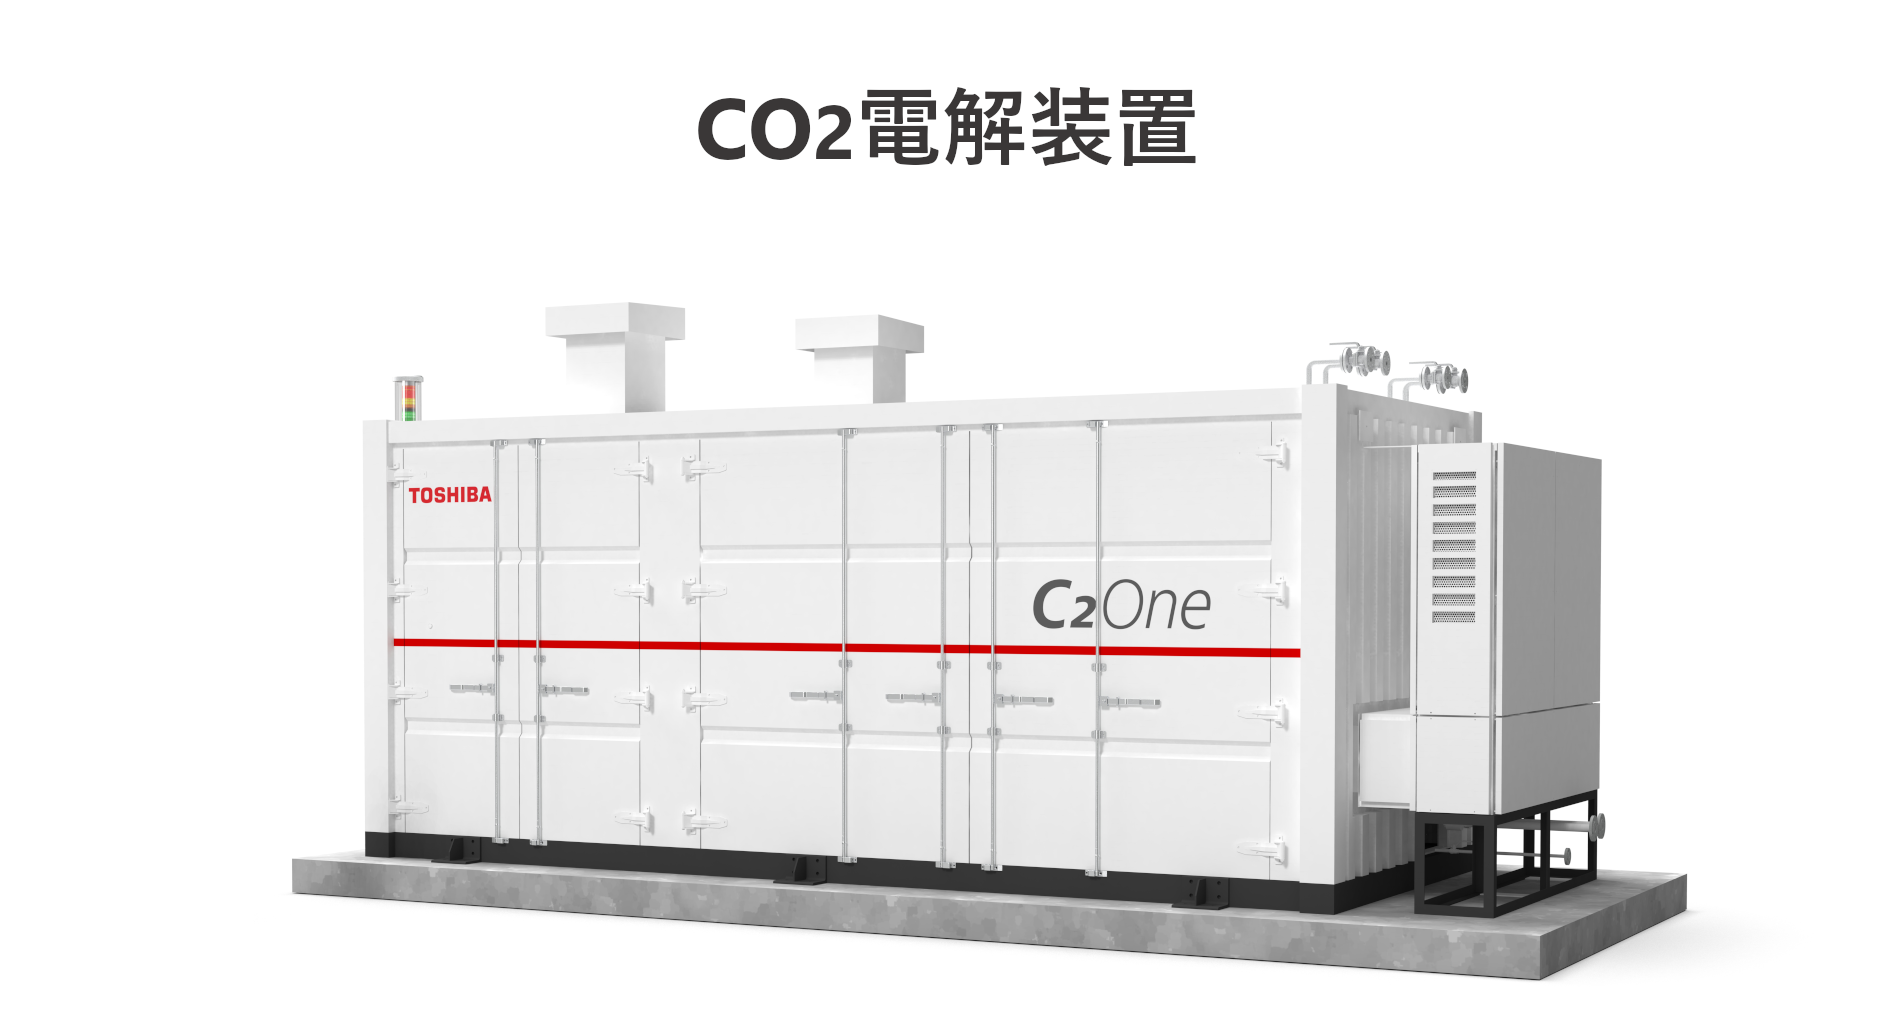 CO2電解装置イメージ図